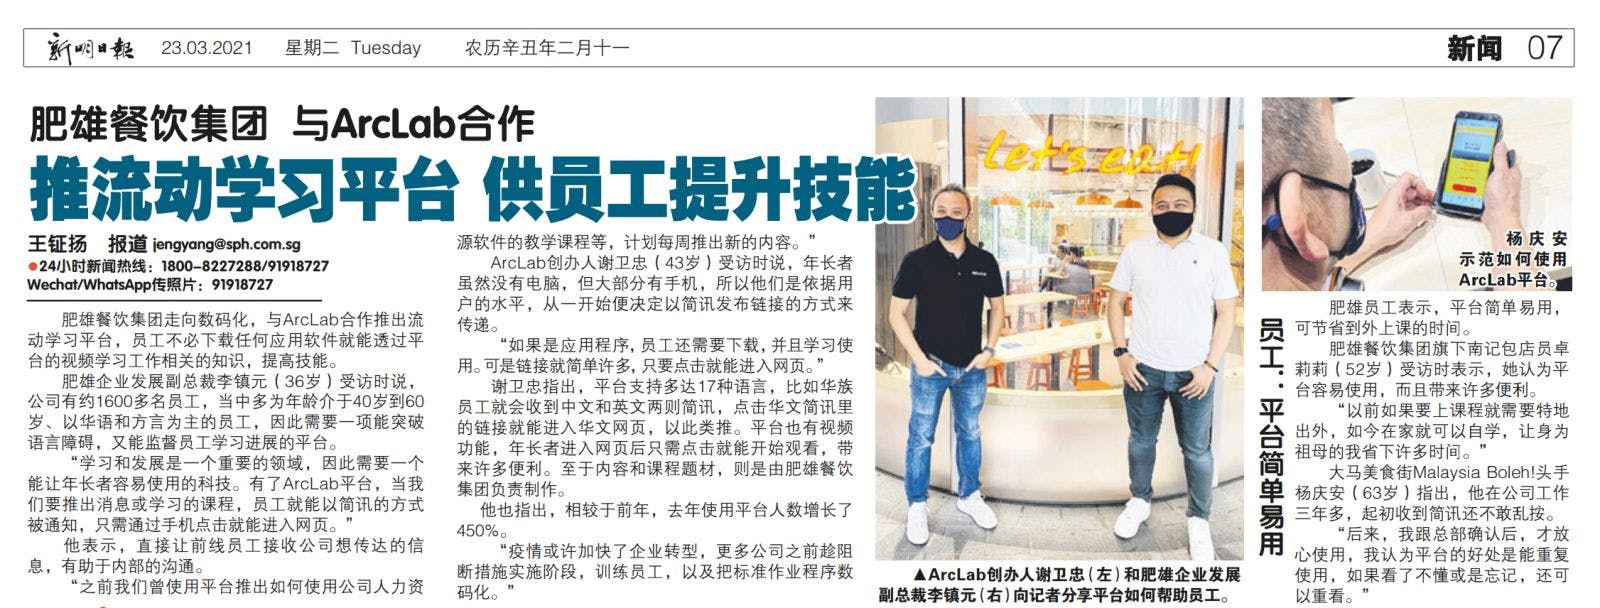 Shin Min Daily News - 肥雄餐饮集团与ArcLab合作推流动学习平台供员工提升技能